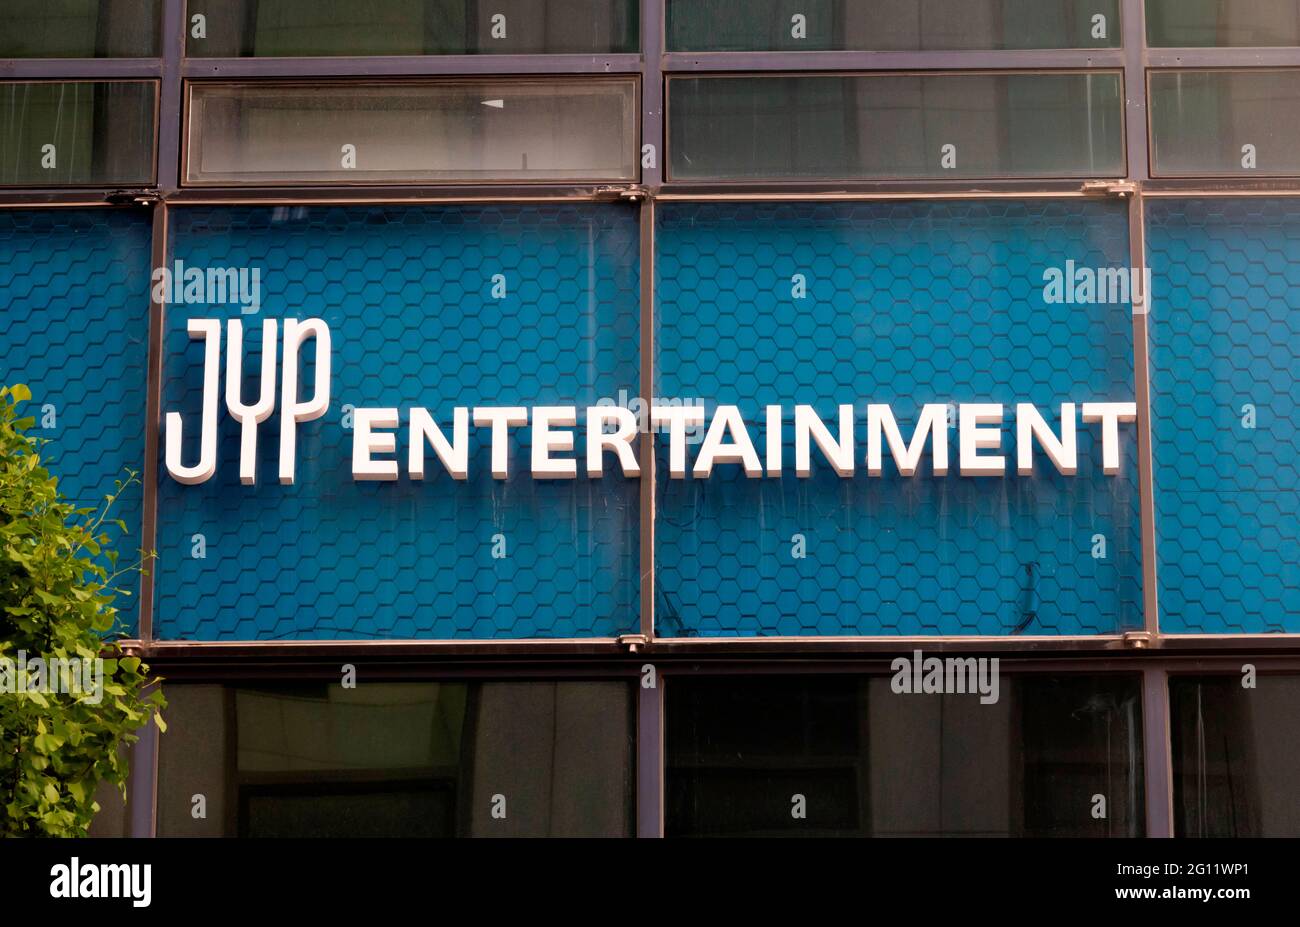 Stock jyp entertainment JYP Entertainment